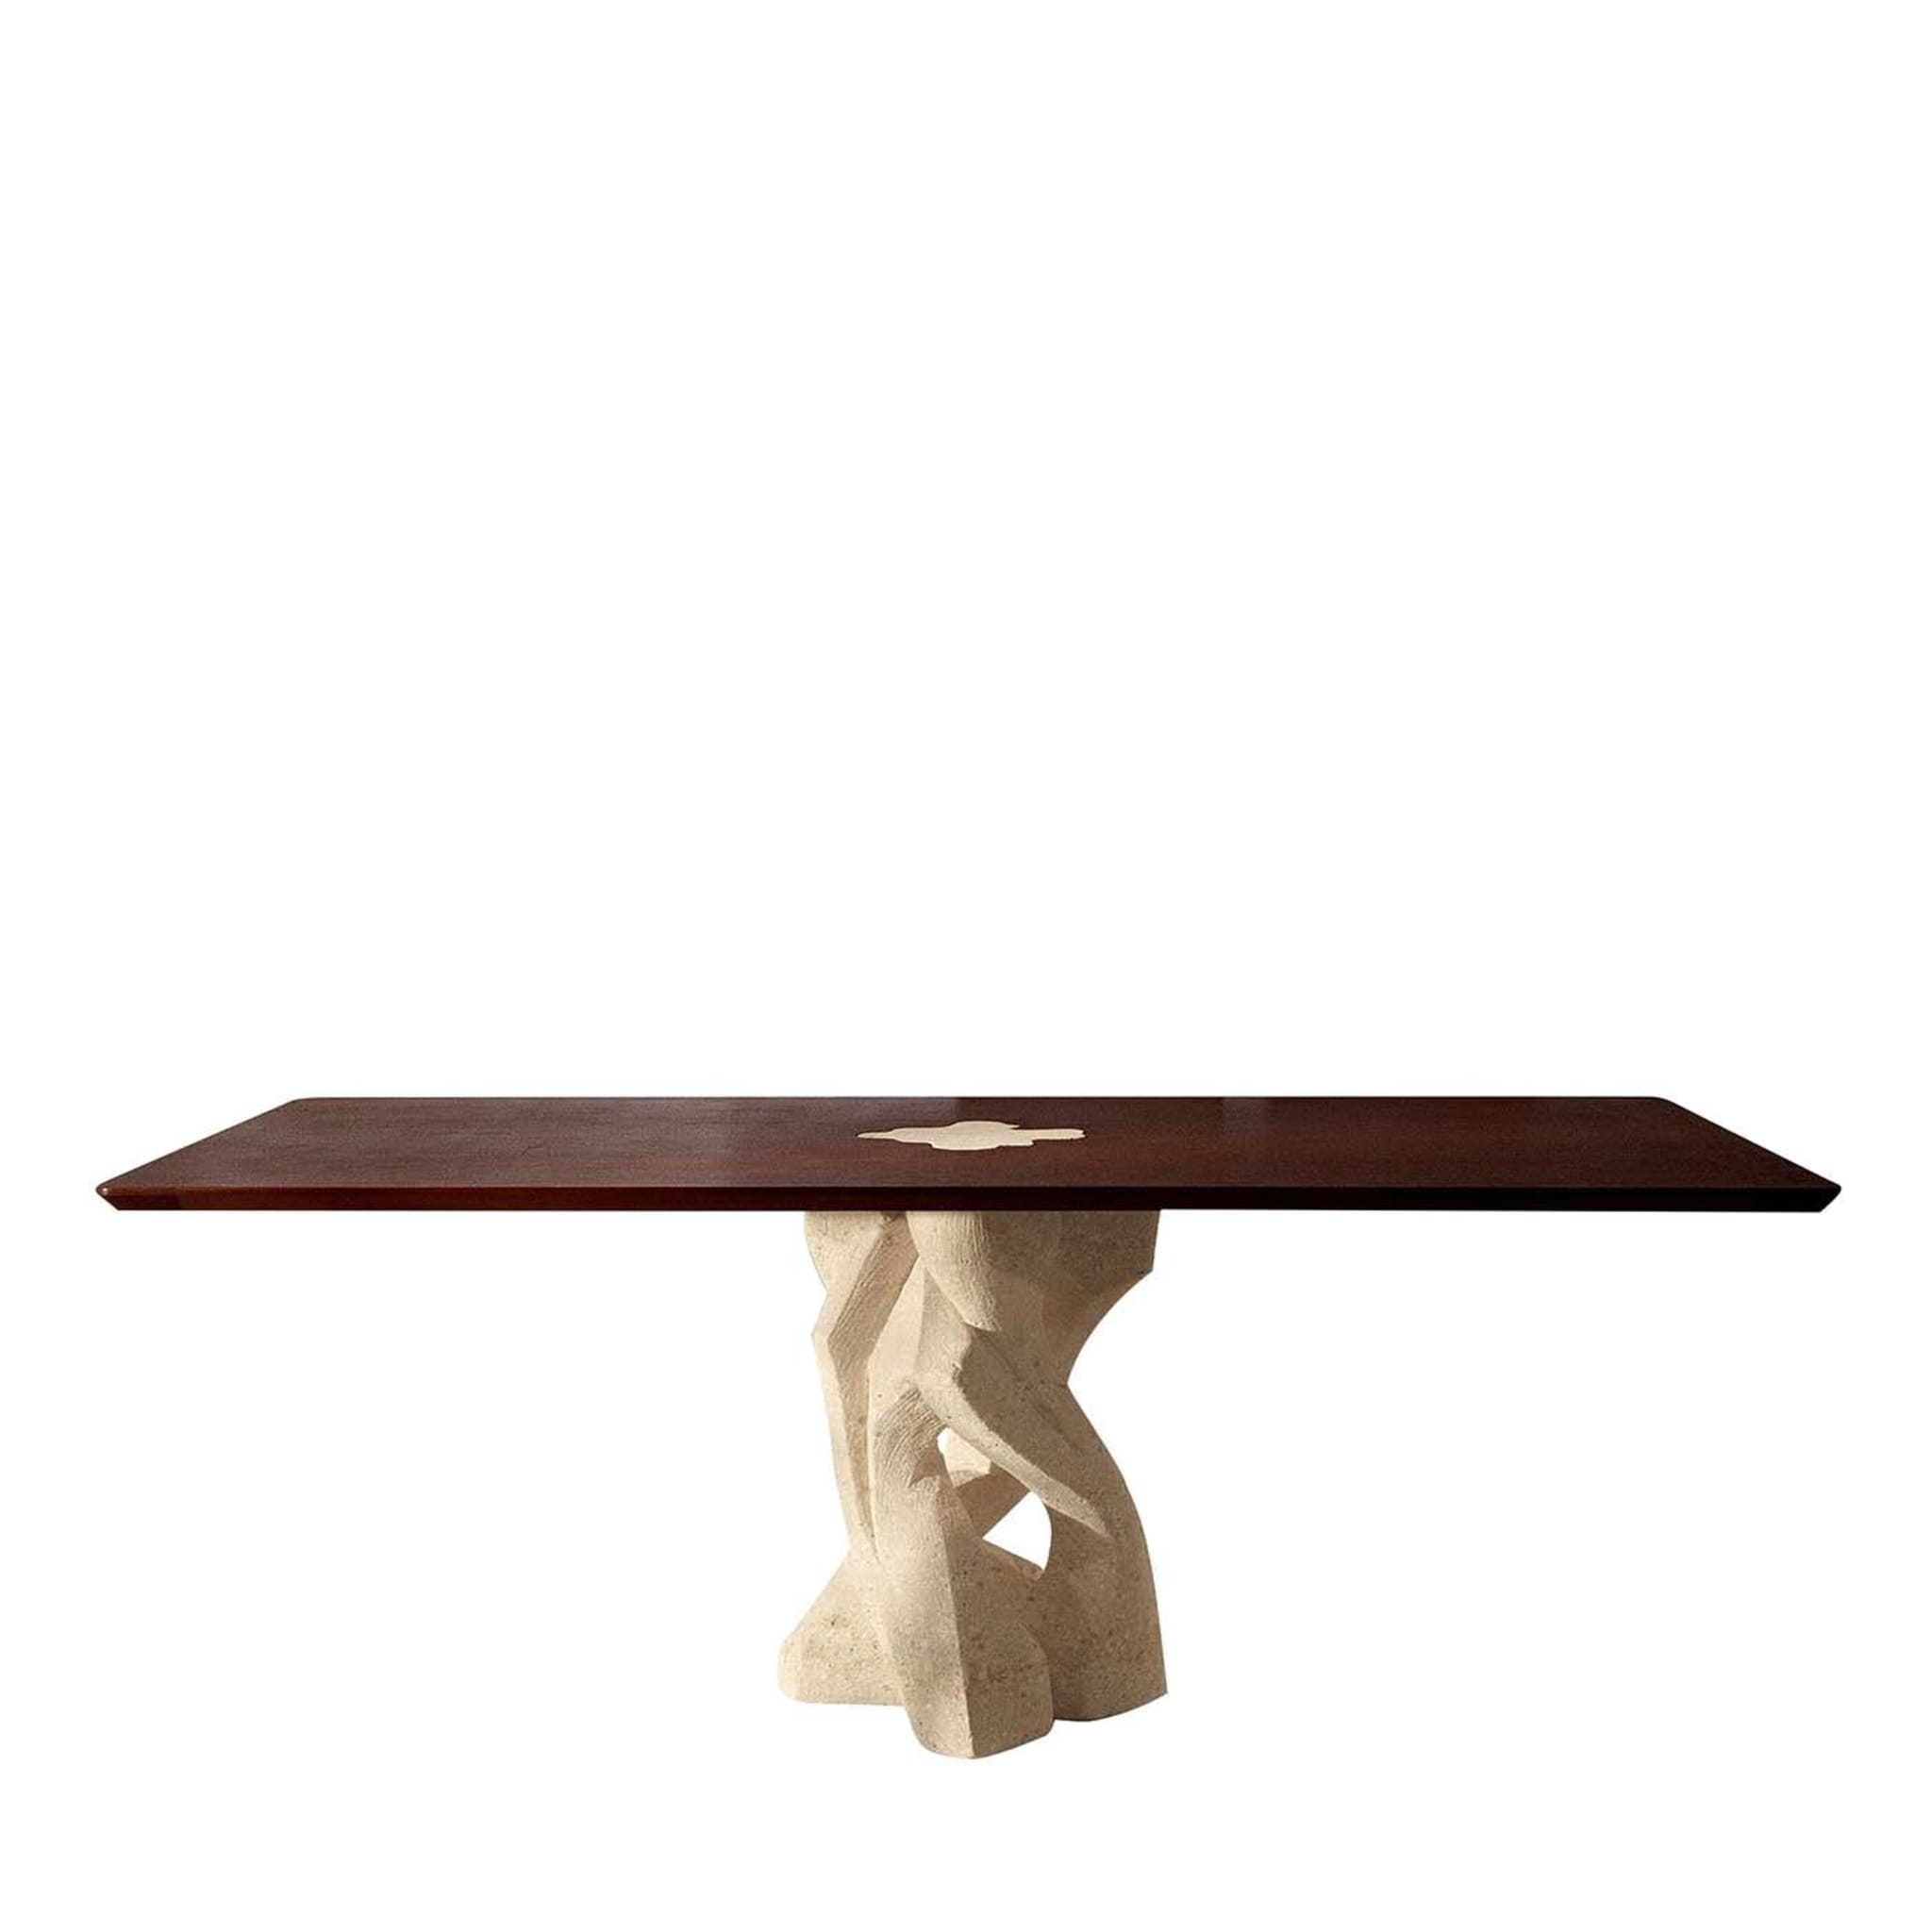 Alex Wood Table by Giandomenico Sandri - Main view